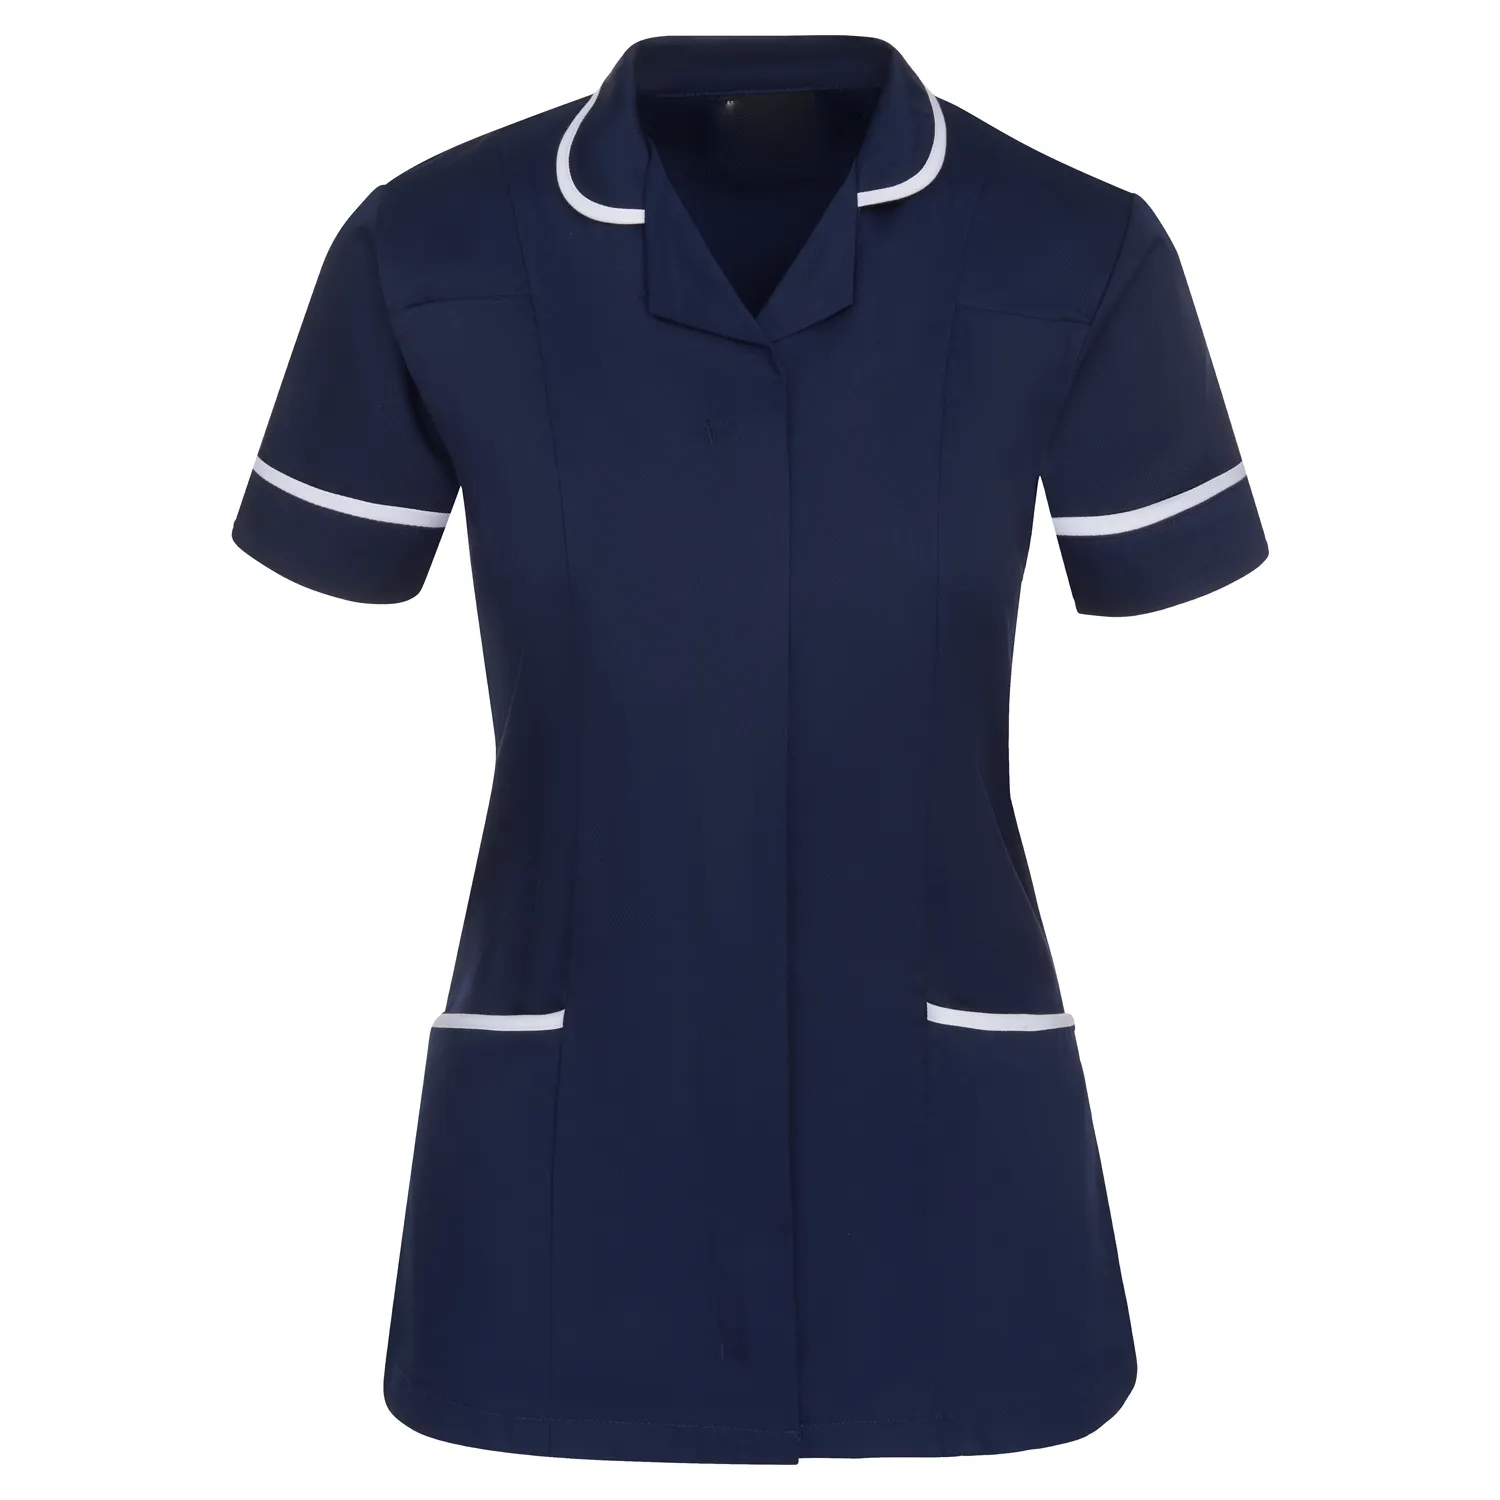 195gsm Polyester / Cotton Private Label Navy Doctor Nurse Healthcare Medical Tunic Scrub Top Hospital Nurse Tunic